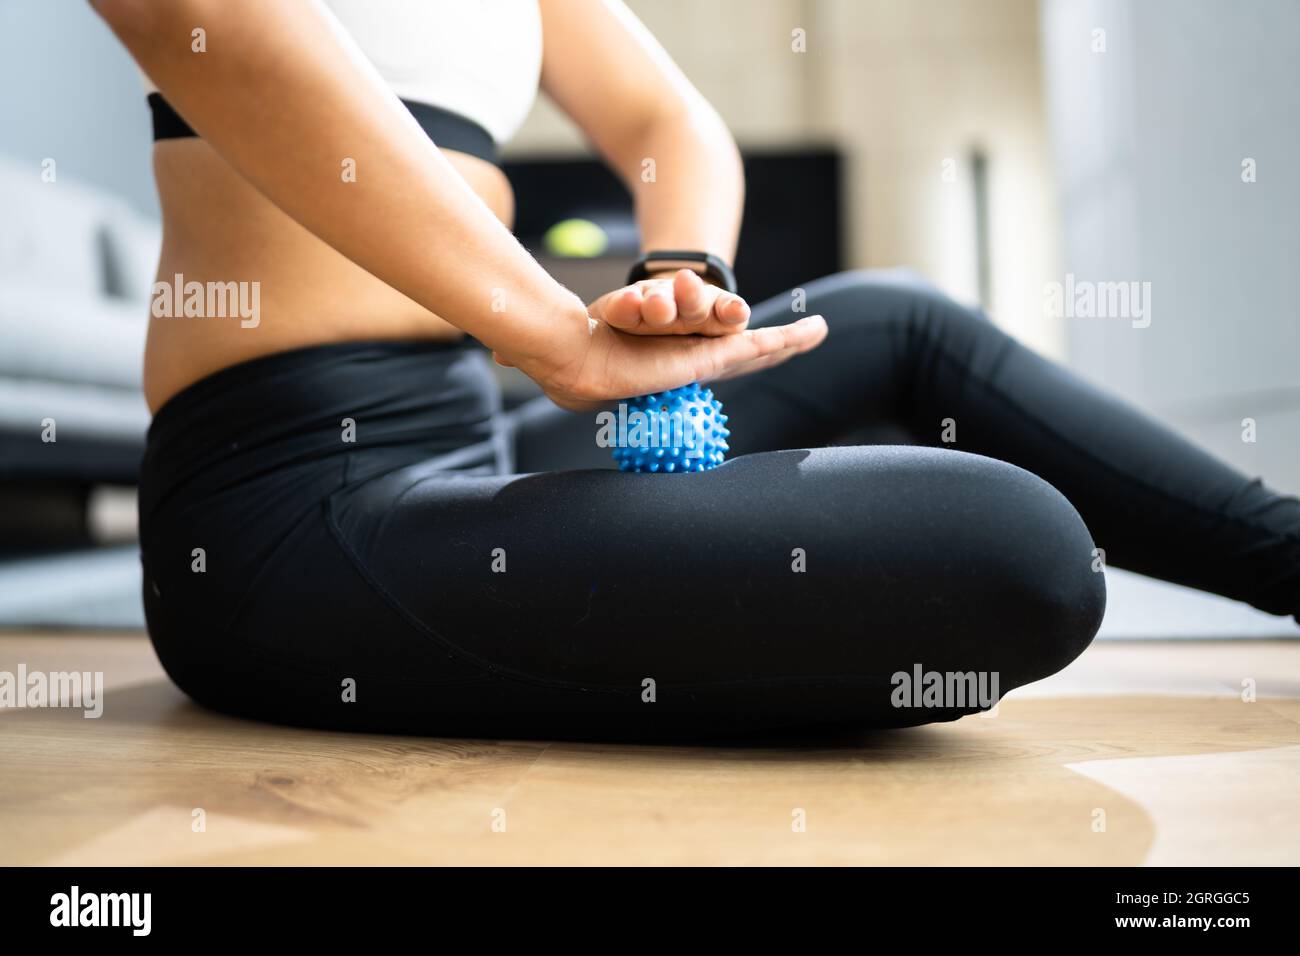 Leg Massage With Trigger Point Spiky Massage Ball. Myofascial Release Stock Photo